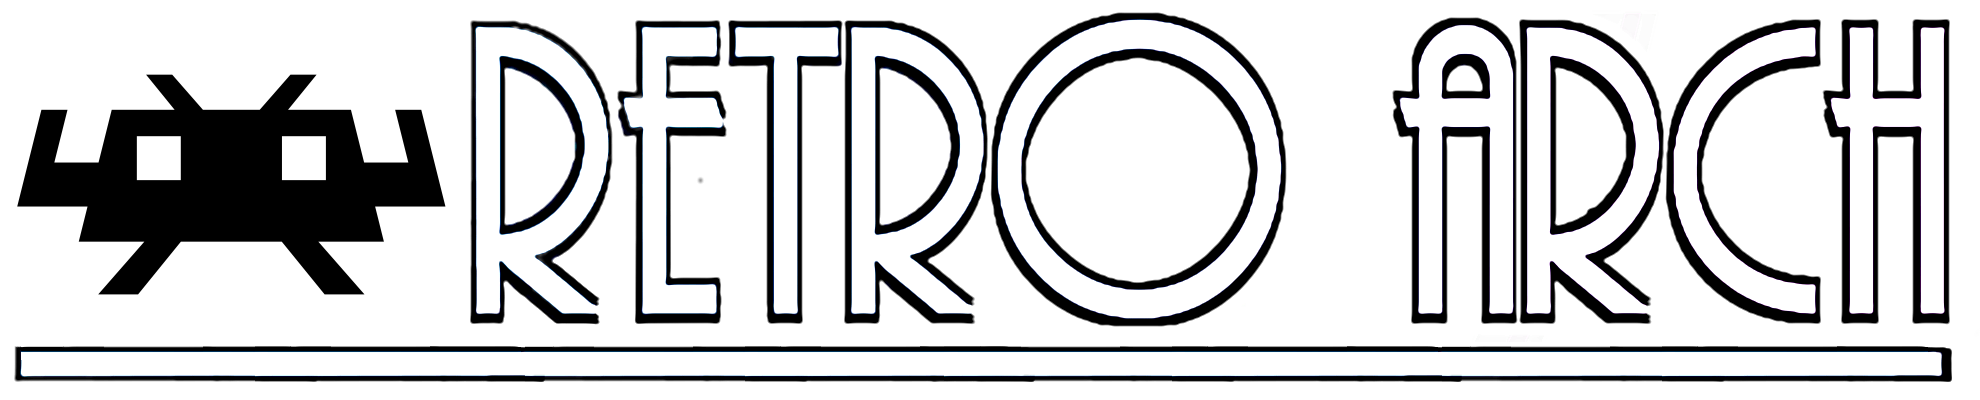 retroarch-plain-logo